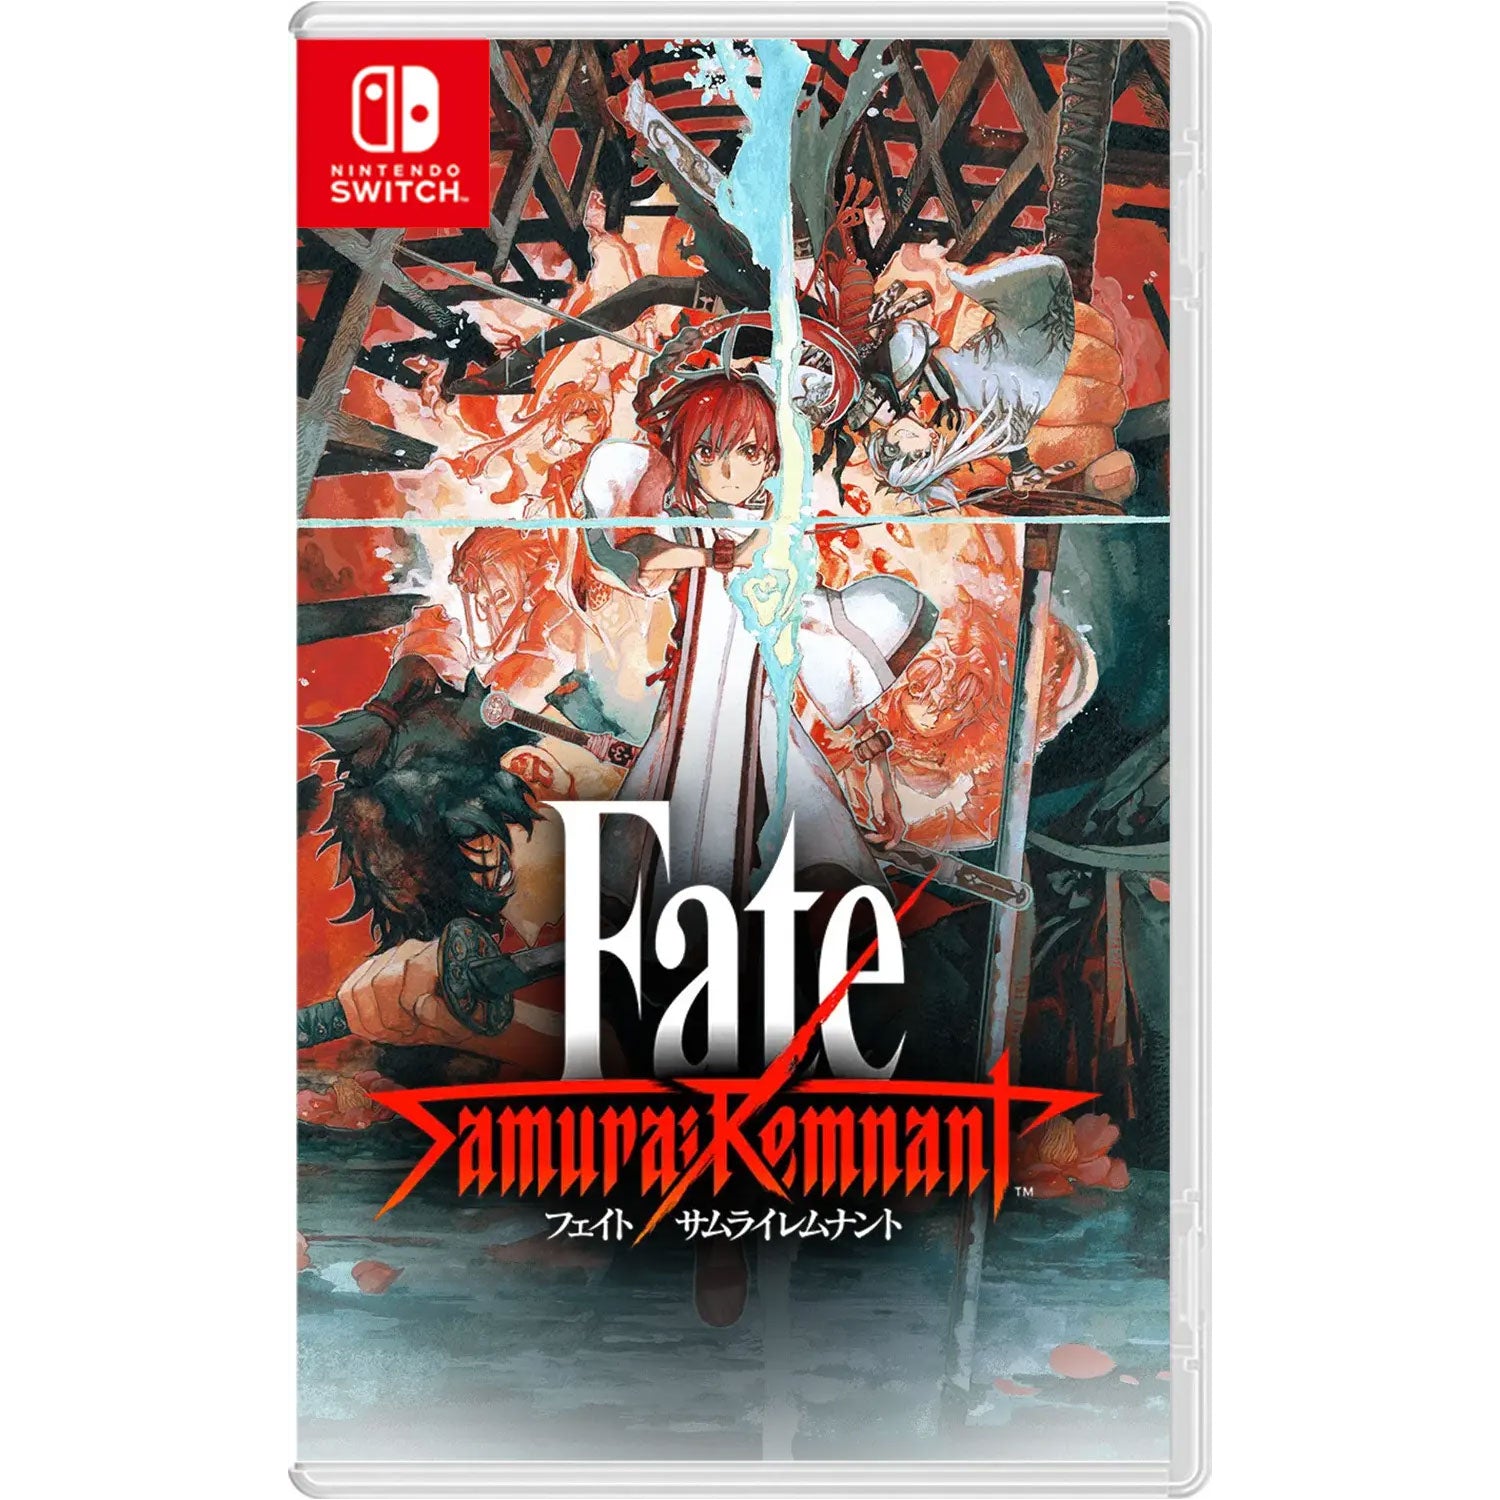 Nintendo Switch Fate/Samurai Remnant